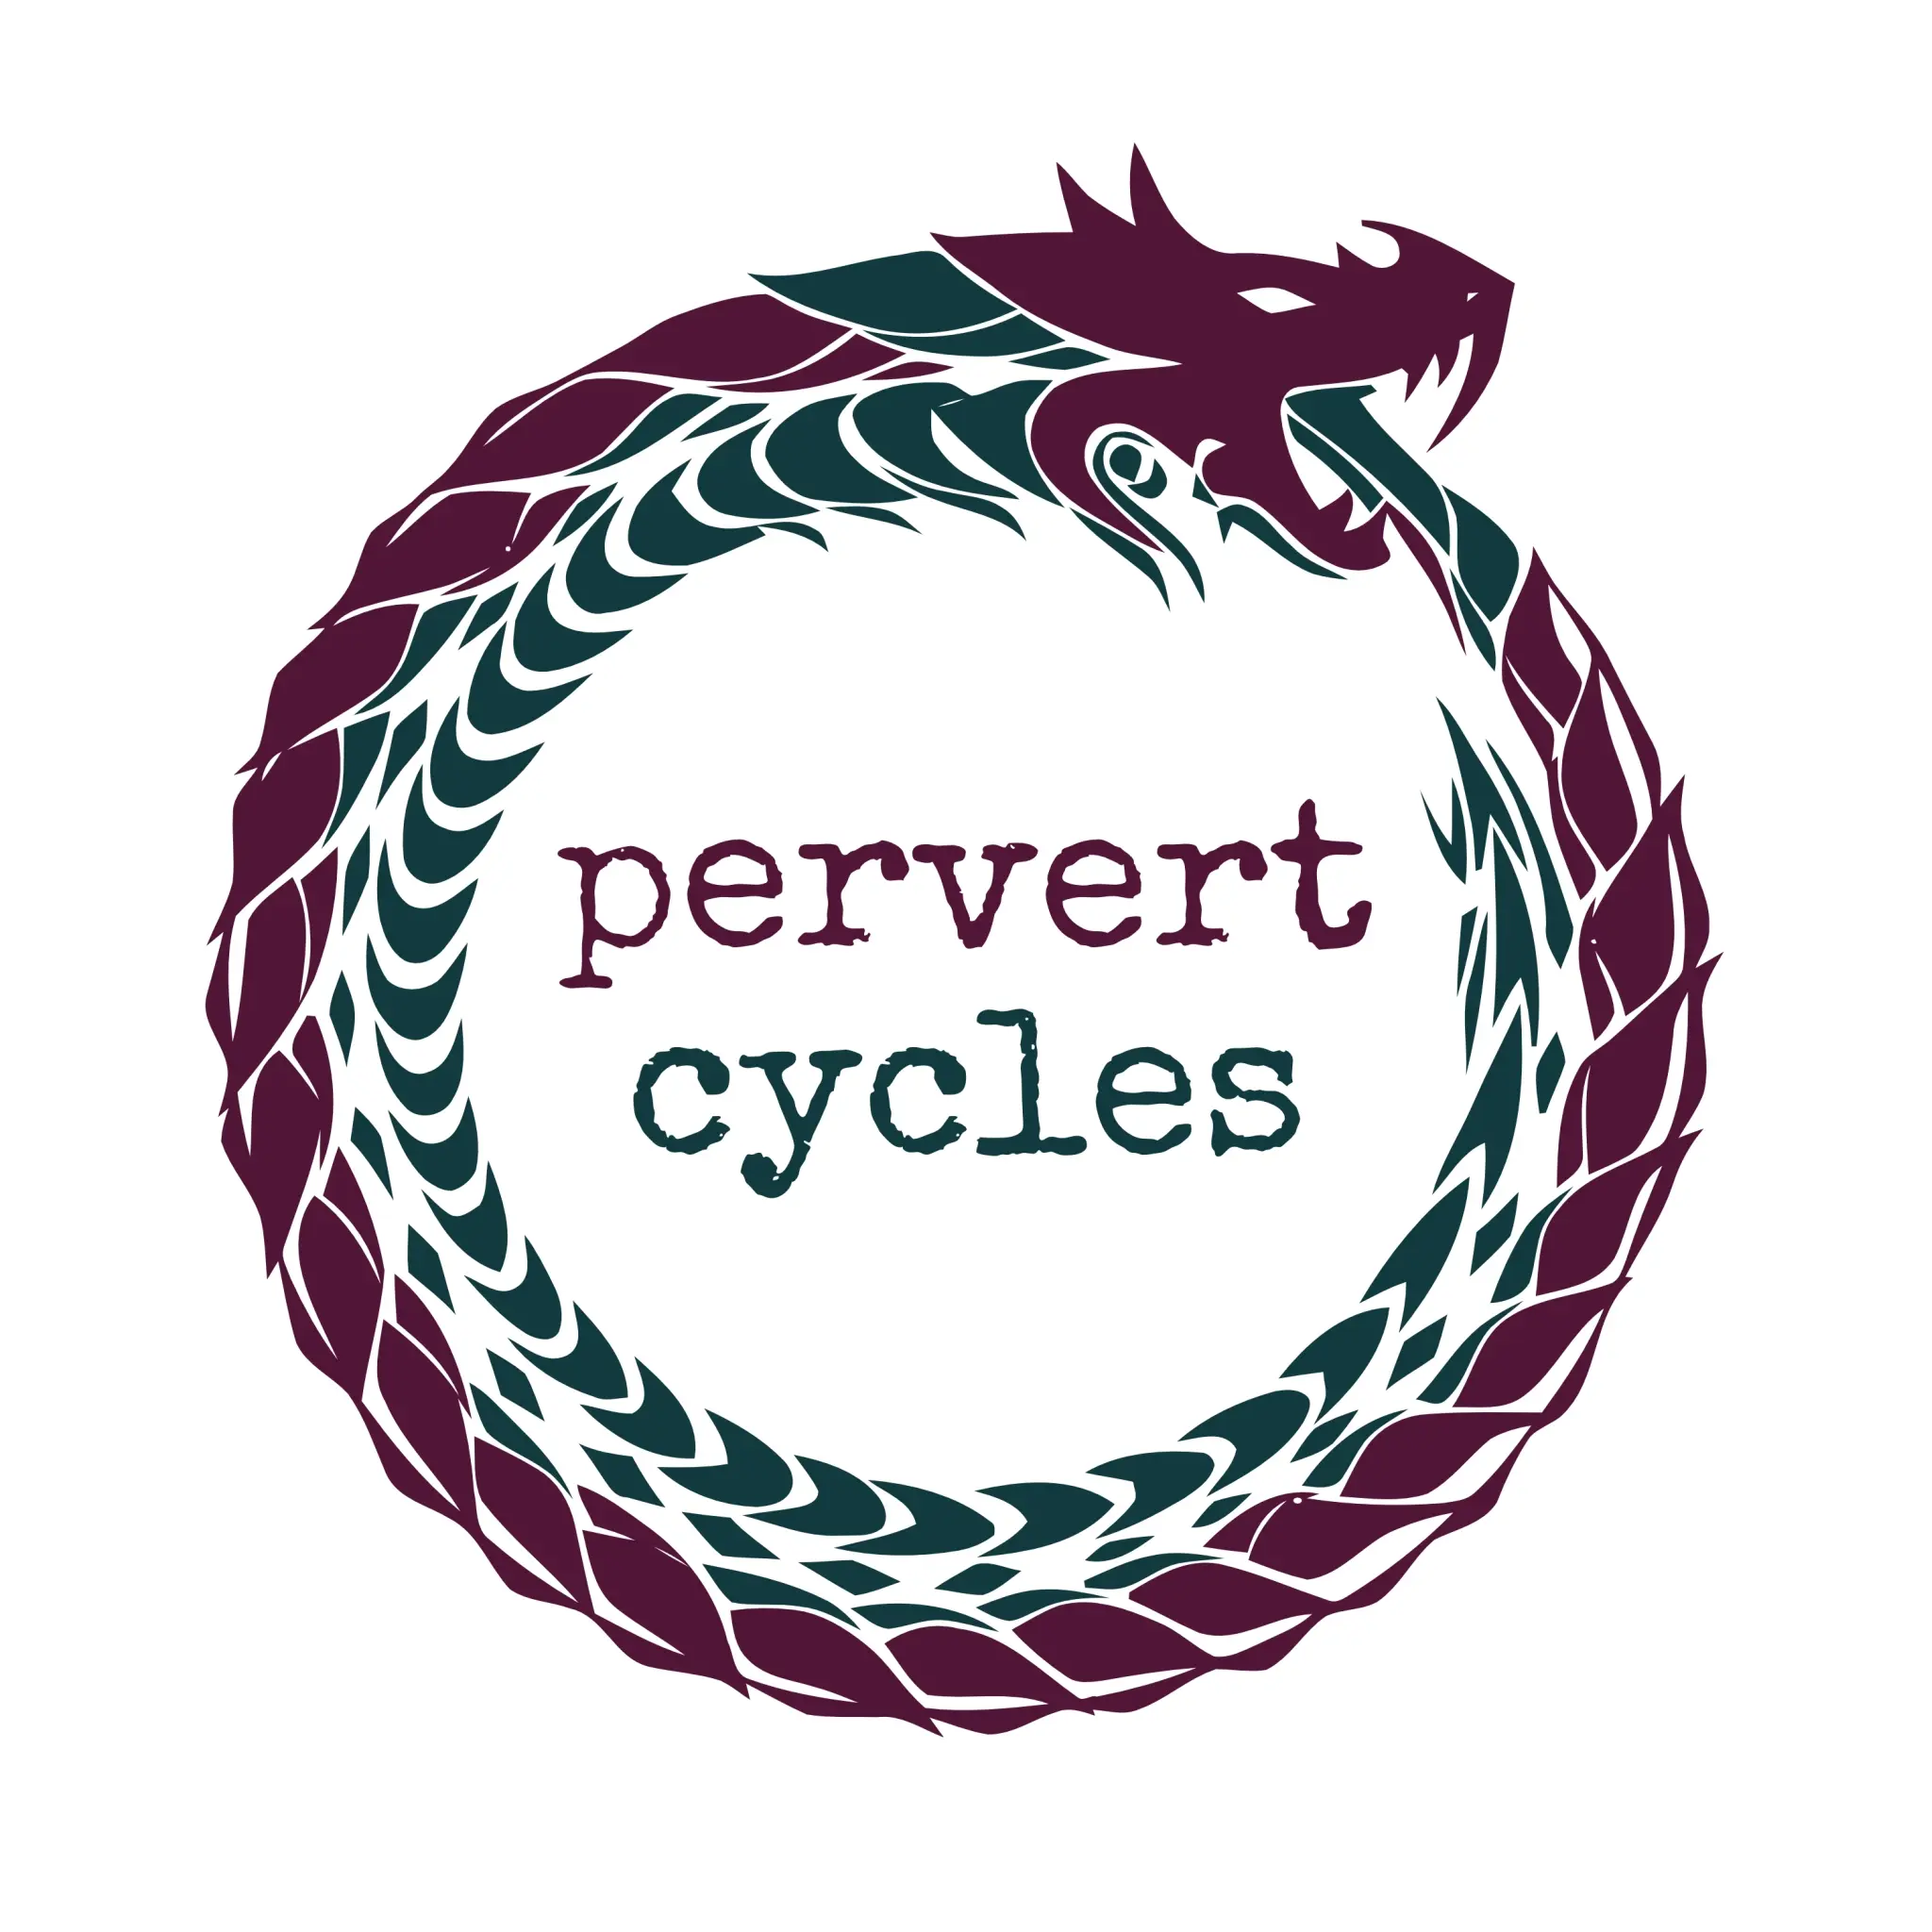 Advertising: pervert:cycles